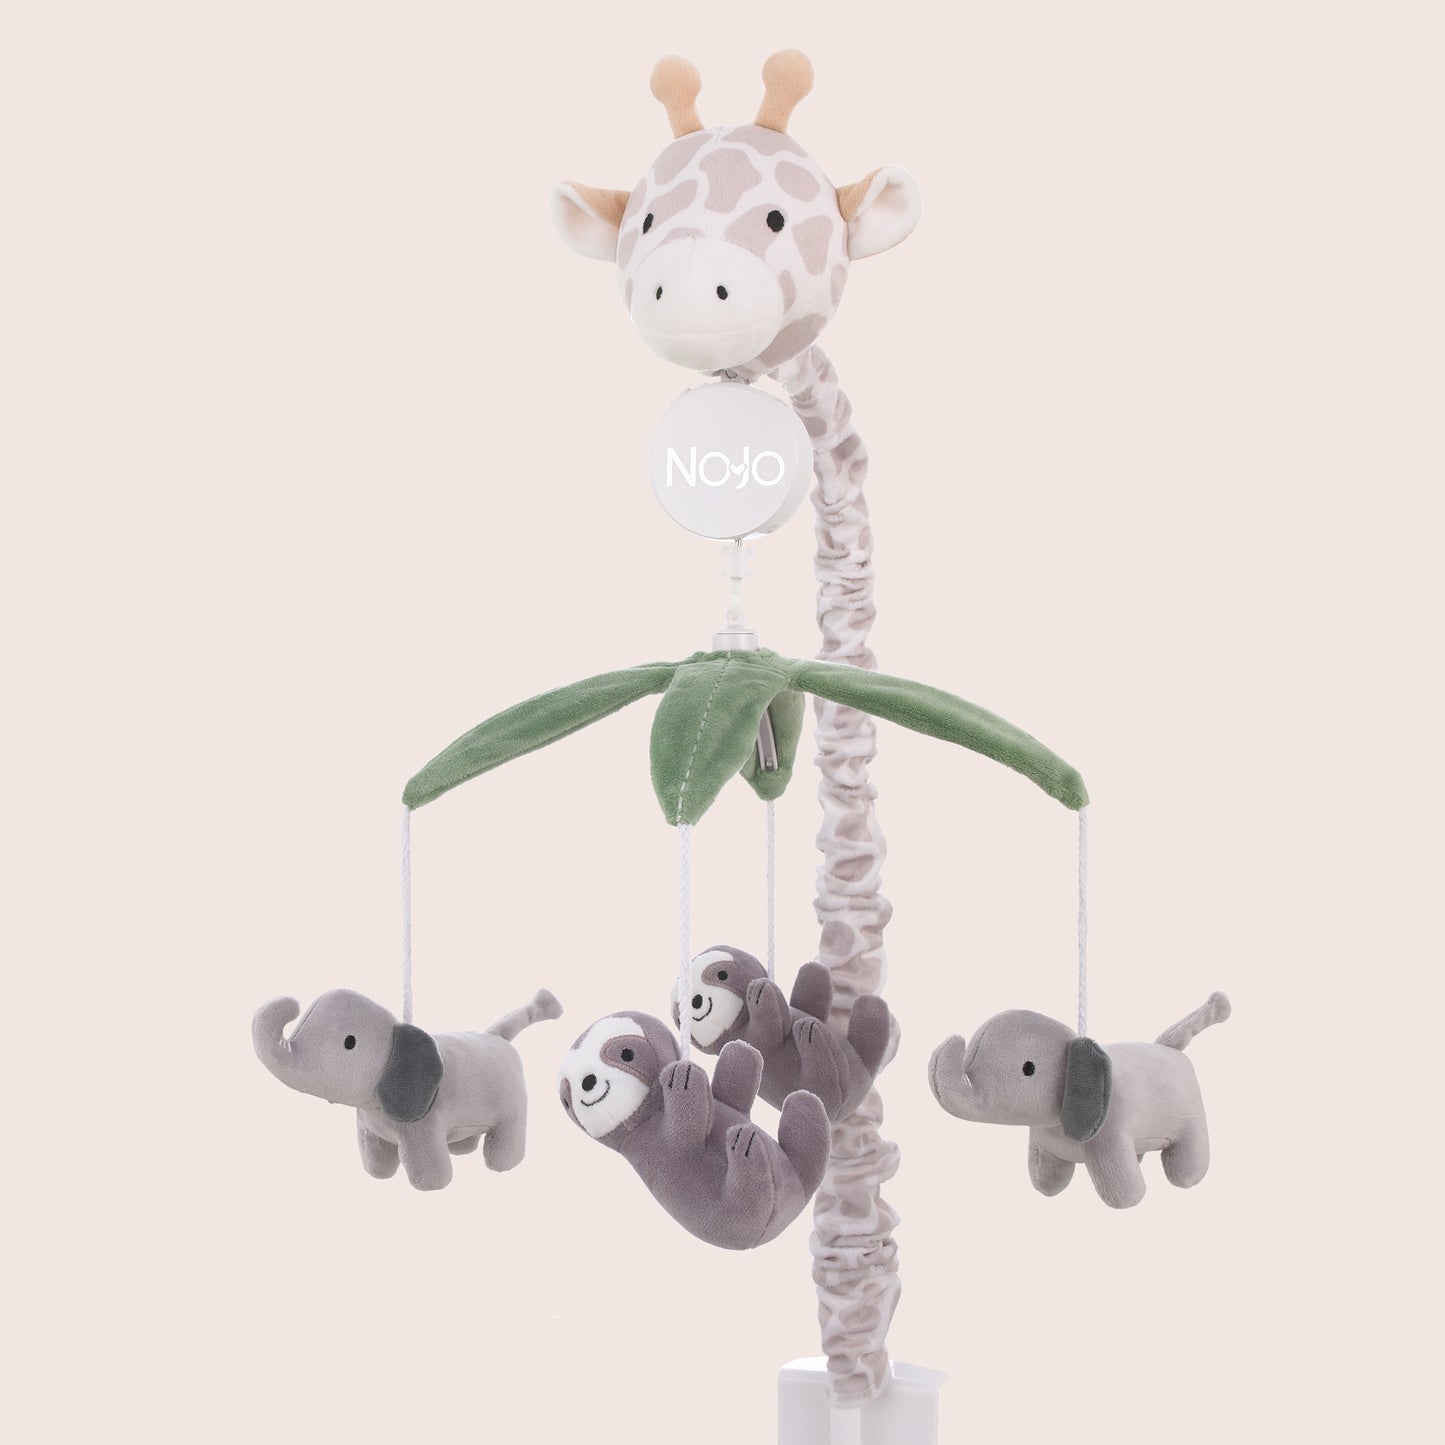 NoJo Plush Giraffe Taupe, Green, and Gray Elephants and Sloth's Musical Mobile